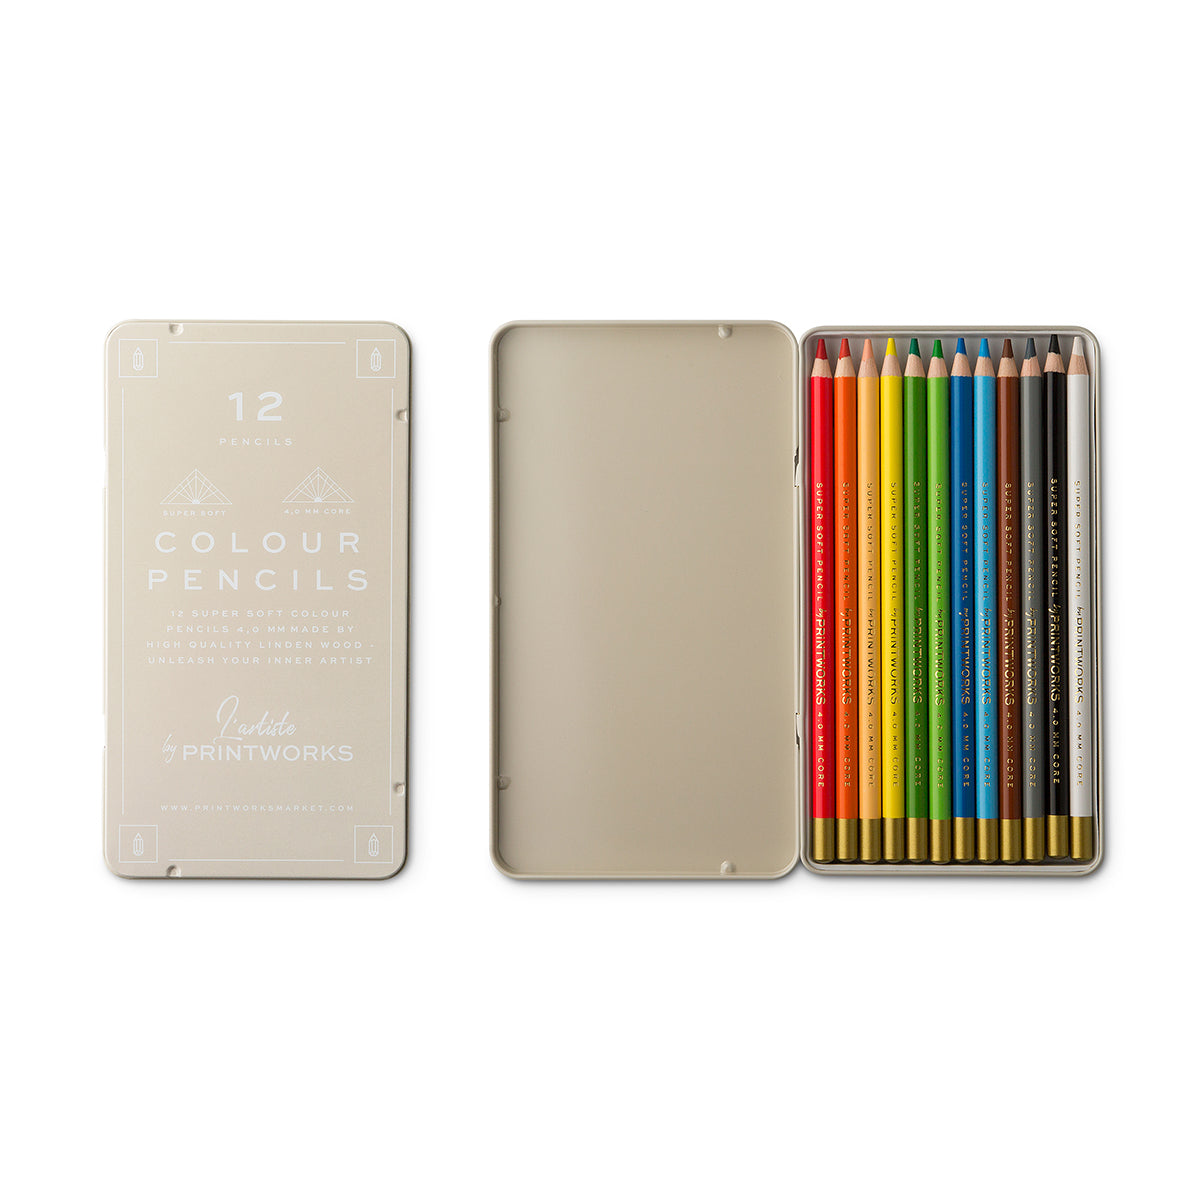 Colour Pencils (set of 12) - Classic